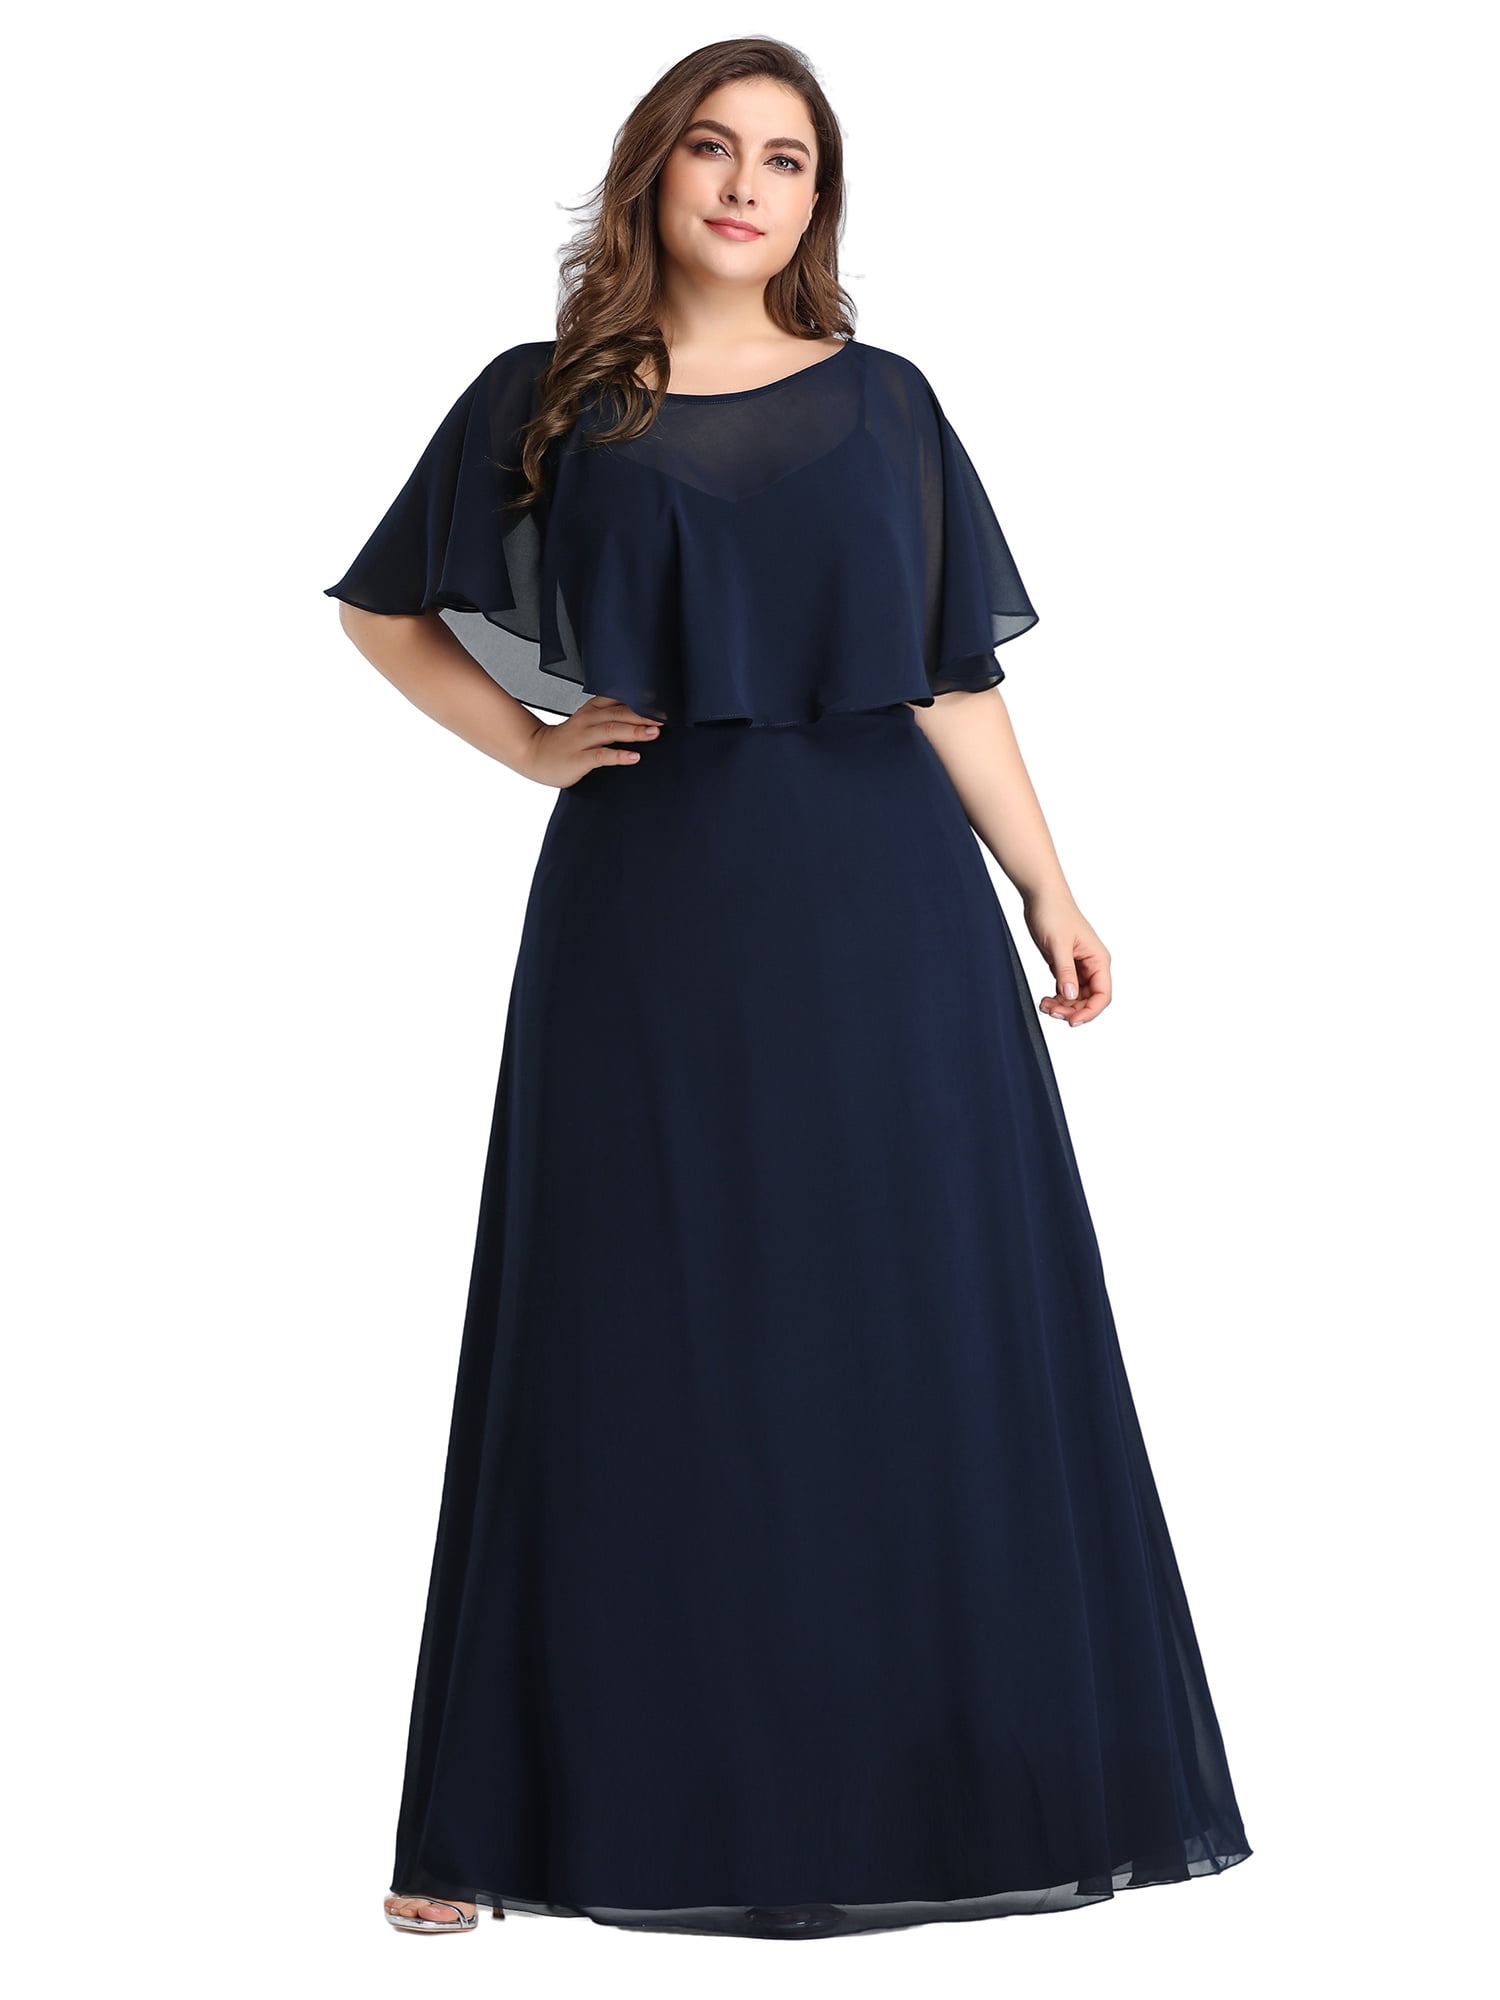 women's plus size navy blue dress